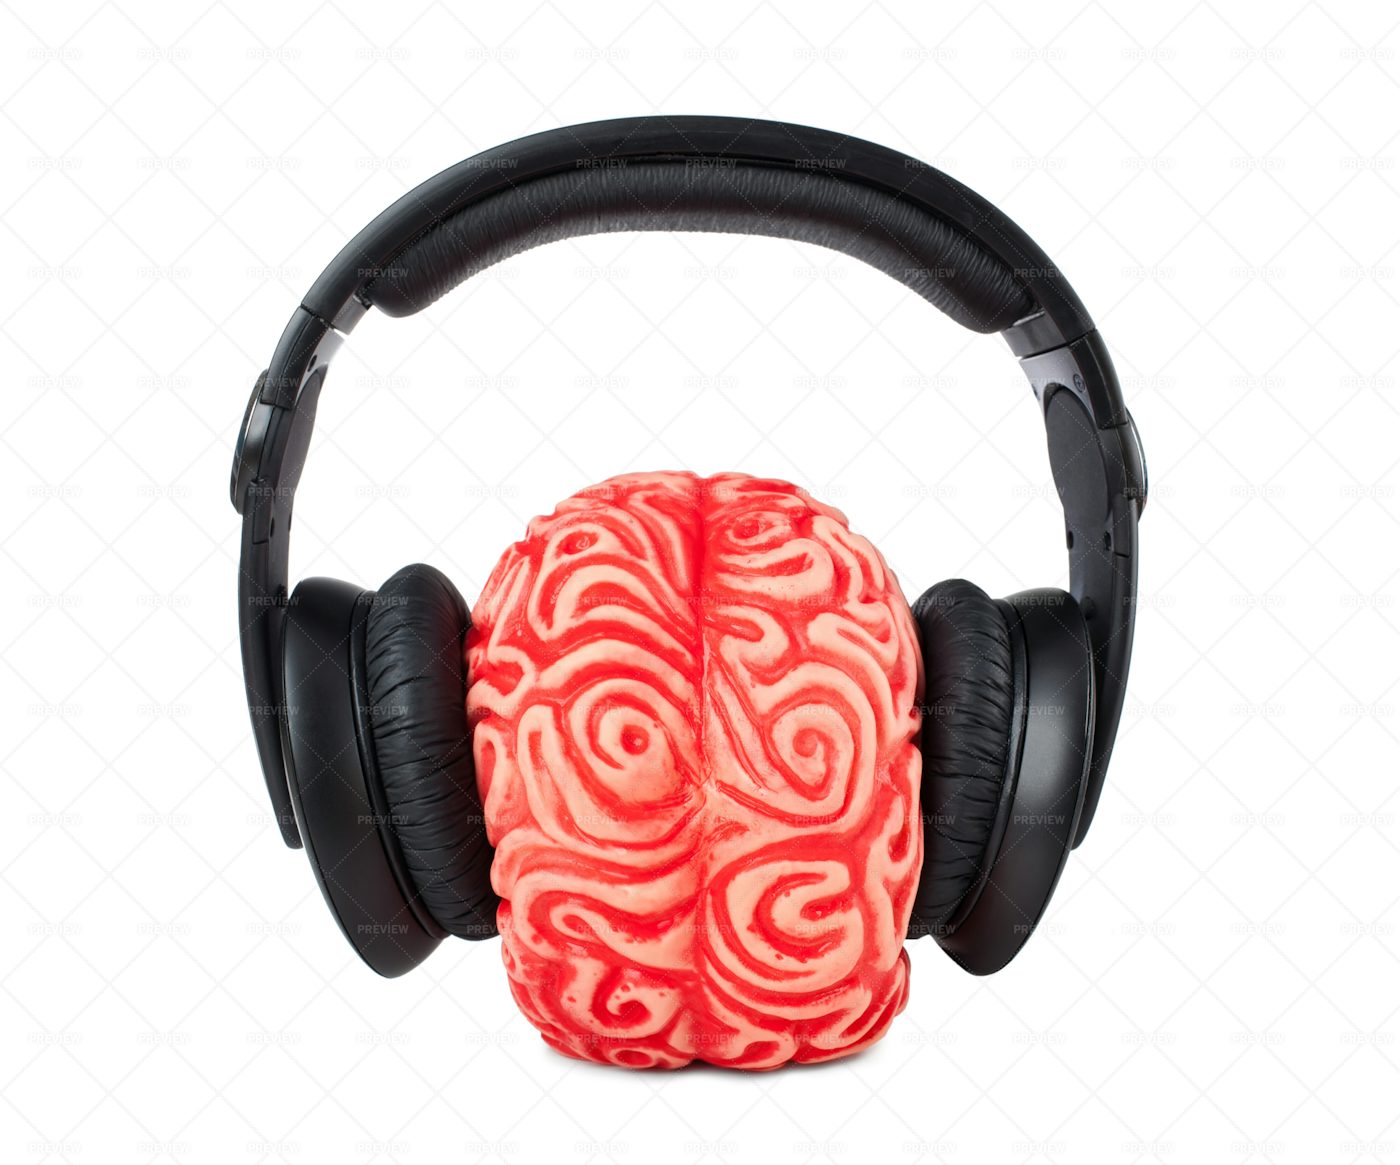 Rubber Brain With Headphones: Stock Photos